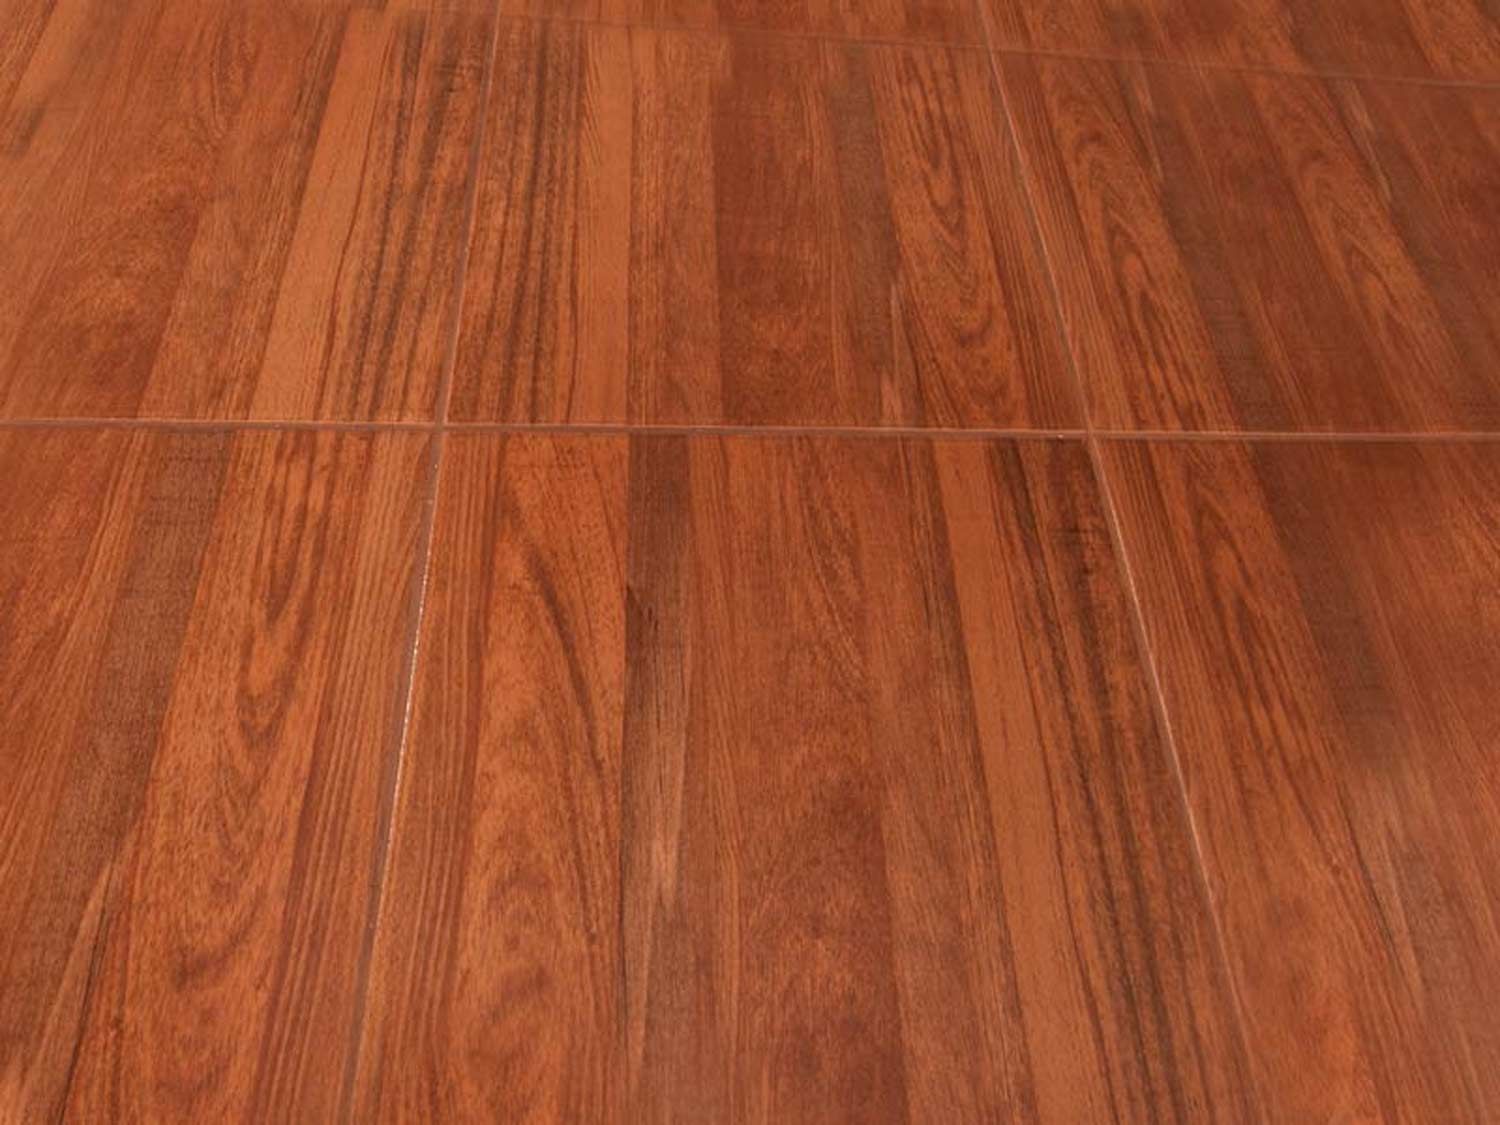 Sherwood Cherry Shiny Ceramic Floor Tile - 430 x 430mm